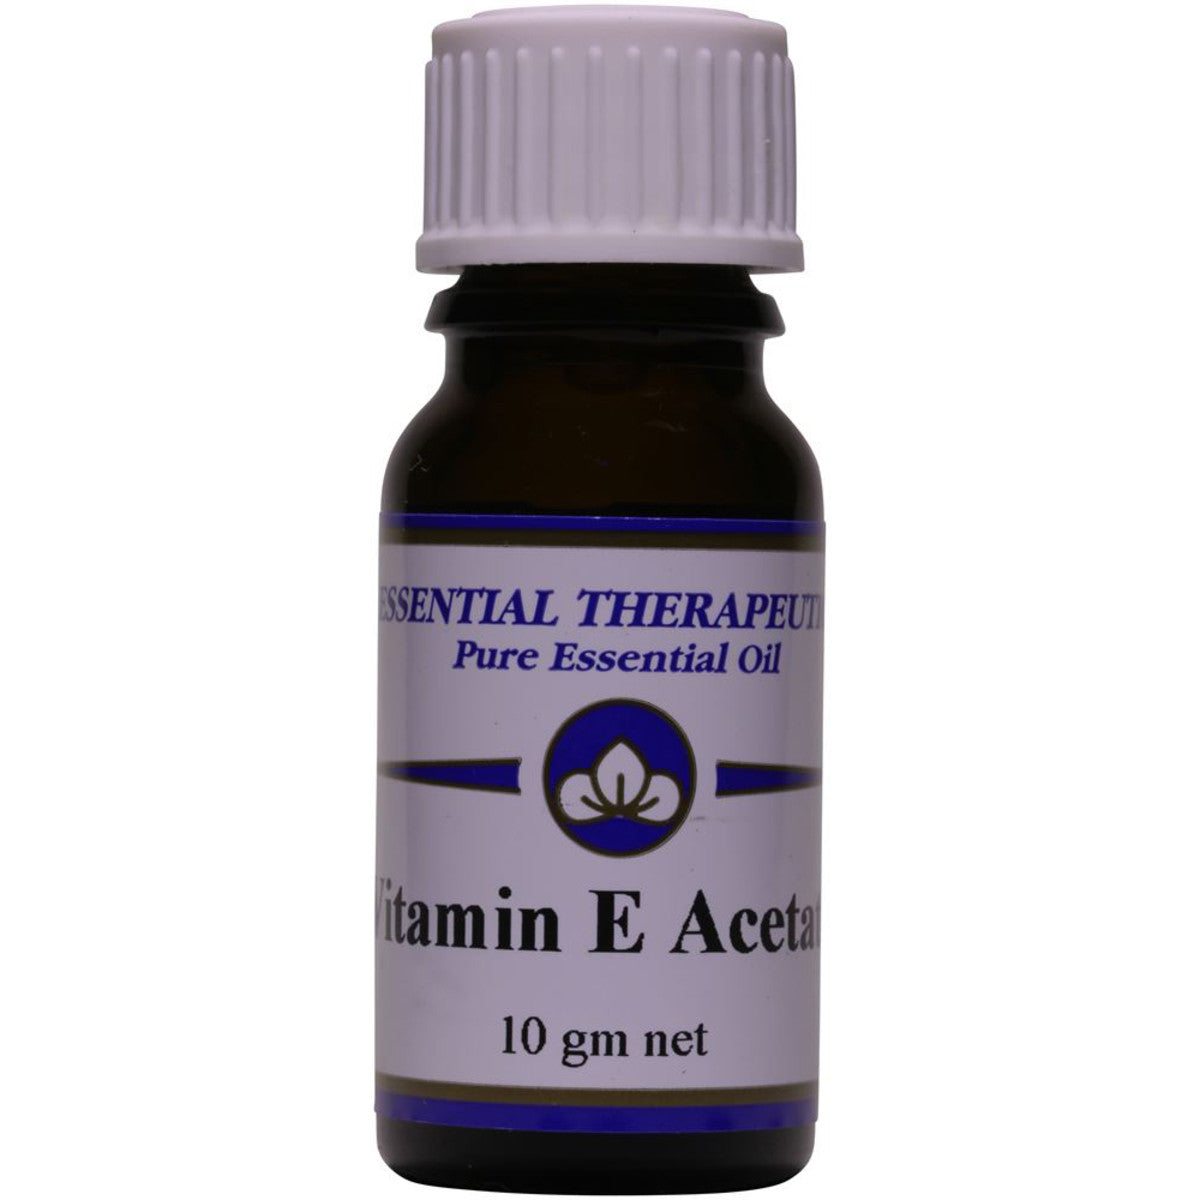 Essential Therapeutics - Vitamin E Acetate 10g